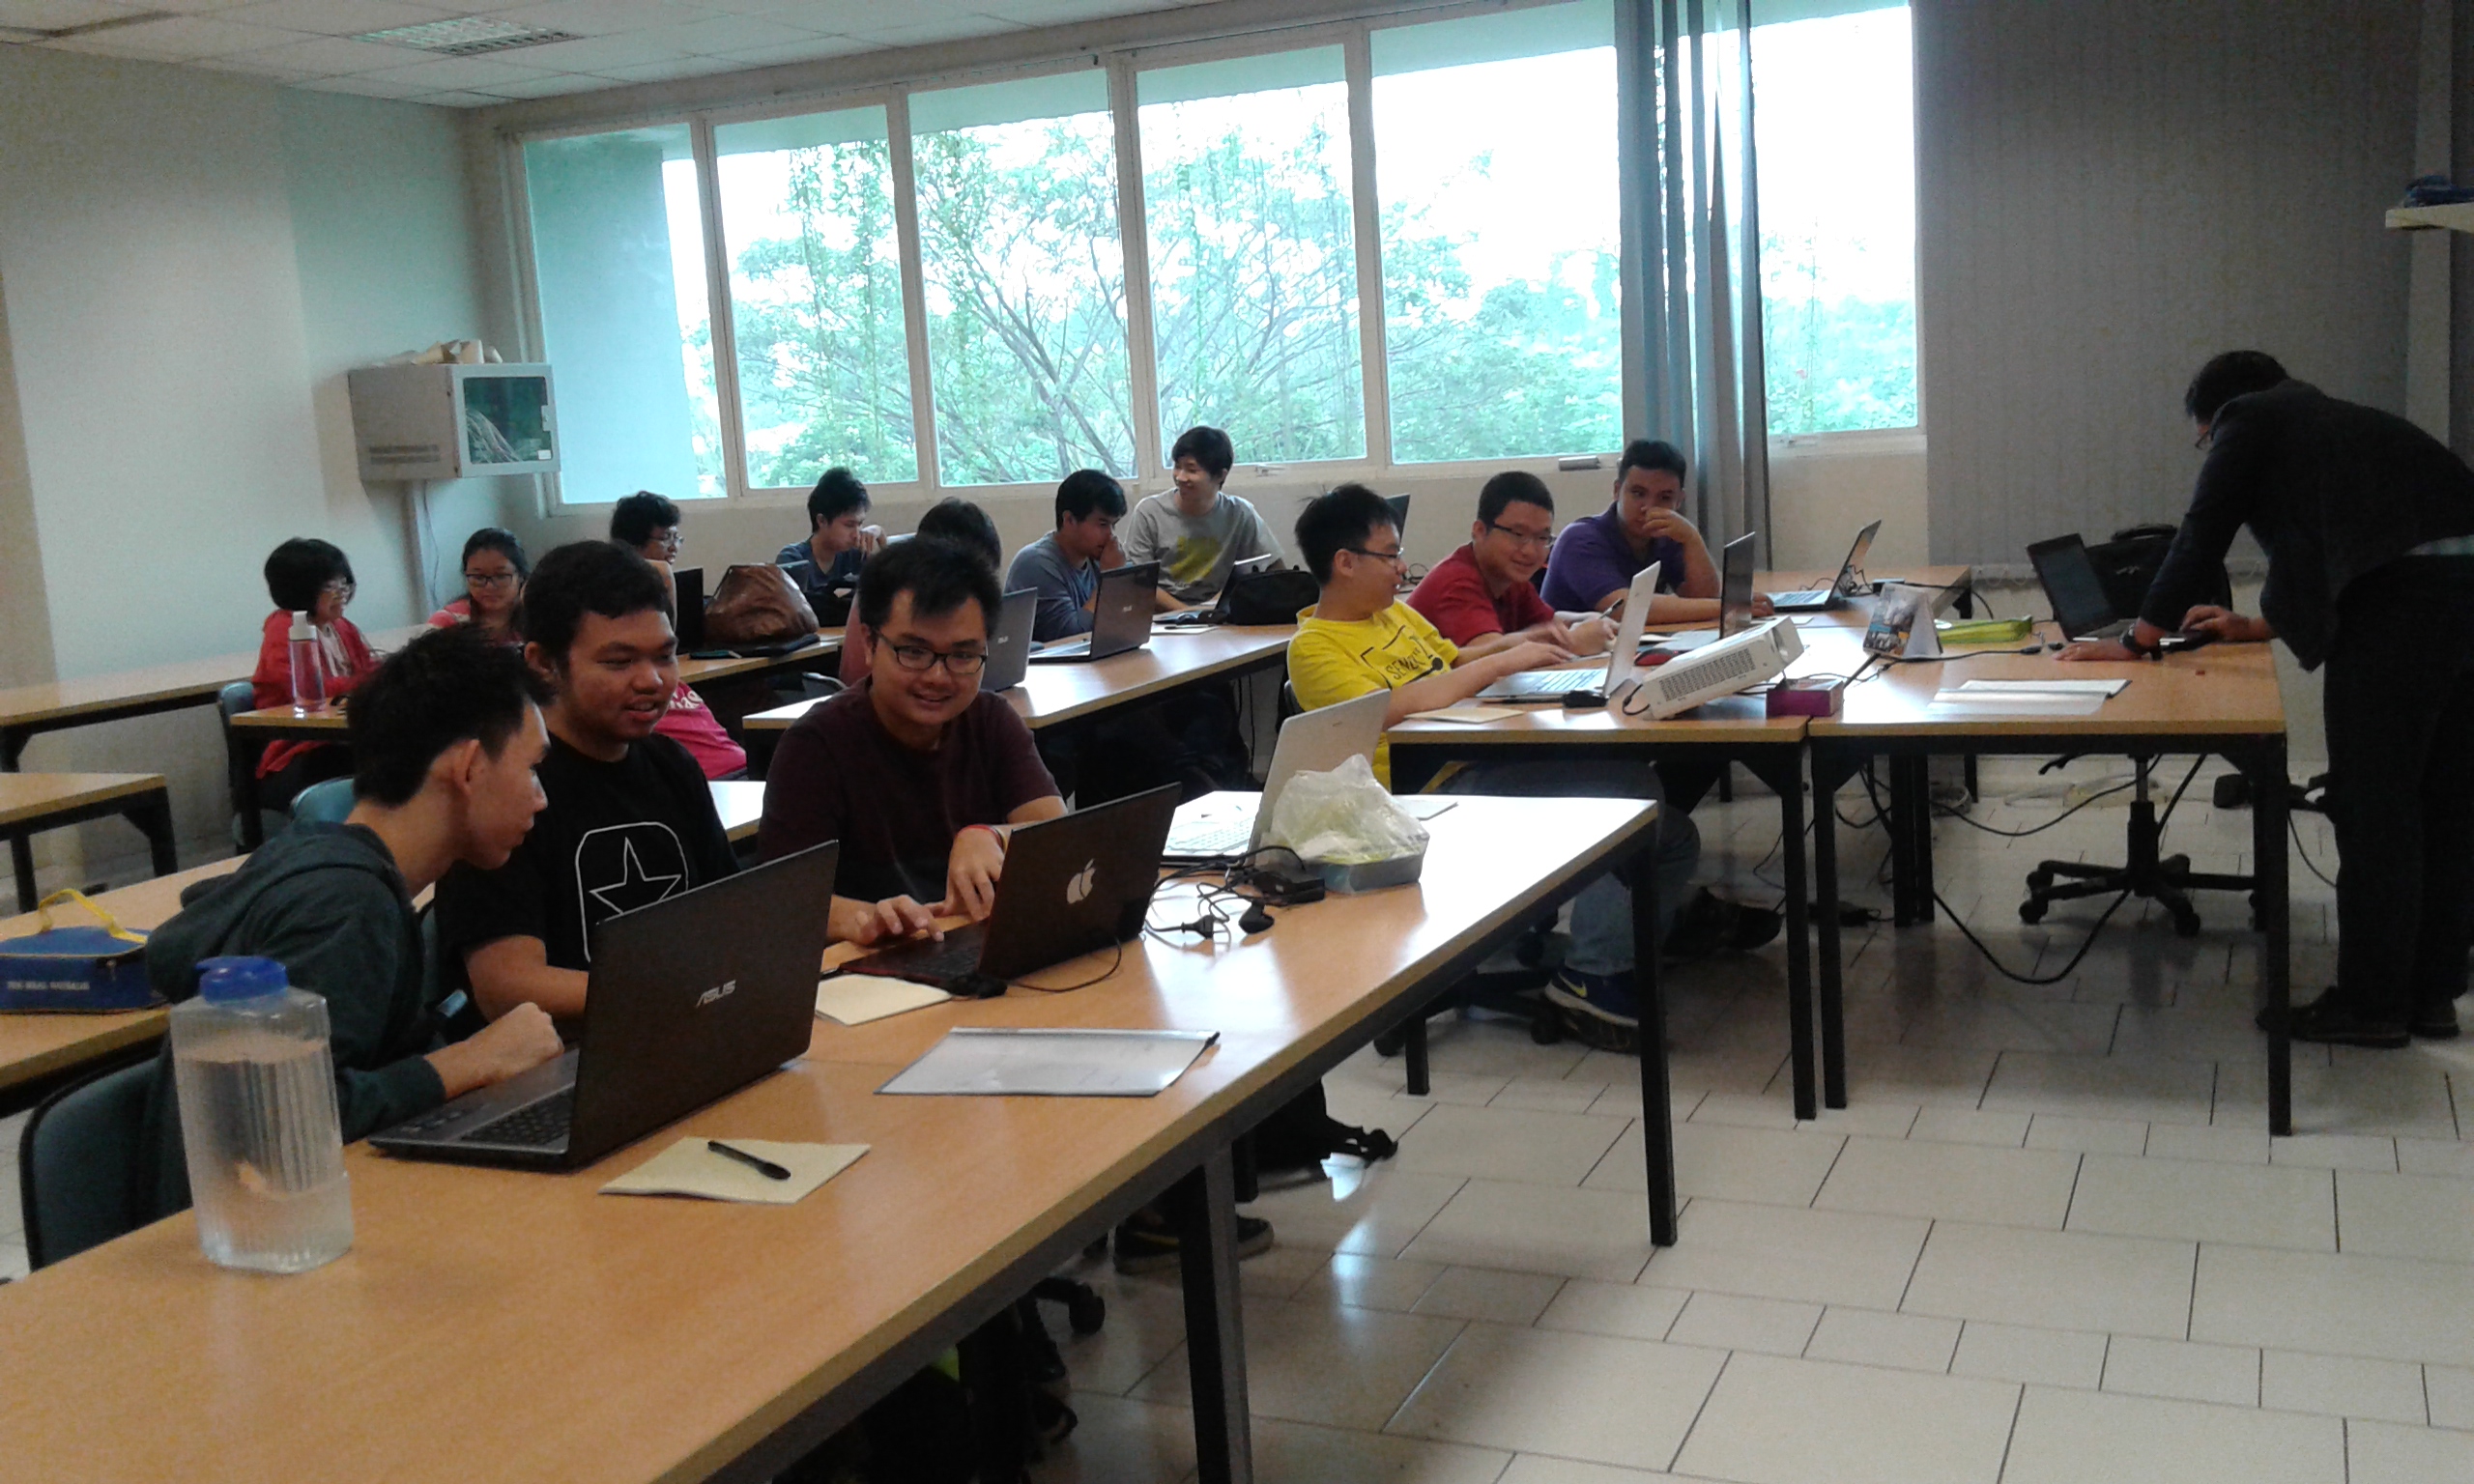 ASP .NET Training prior to IT Students Internship Program in Indonesia